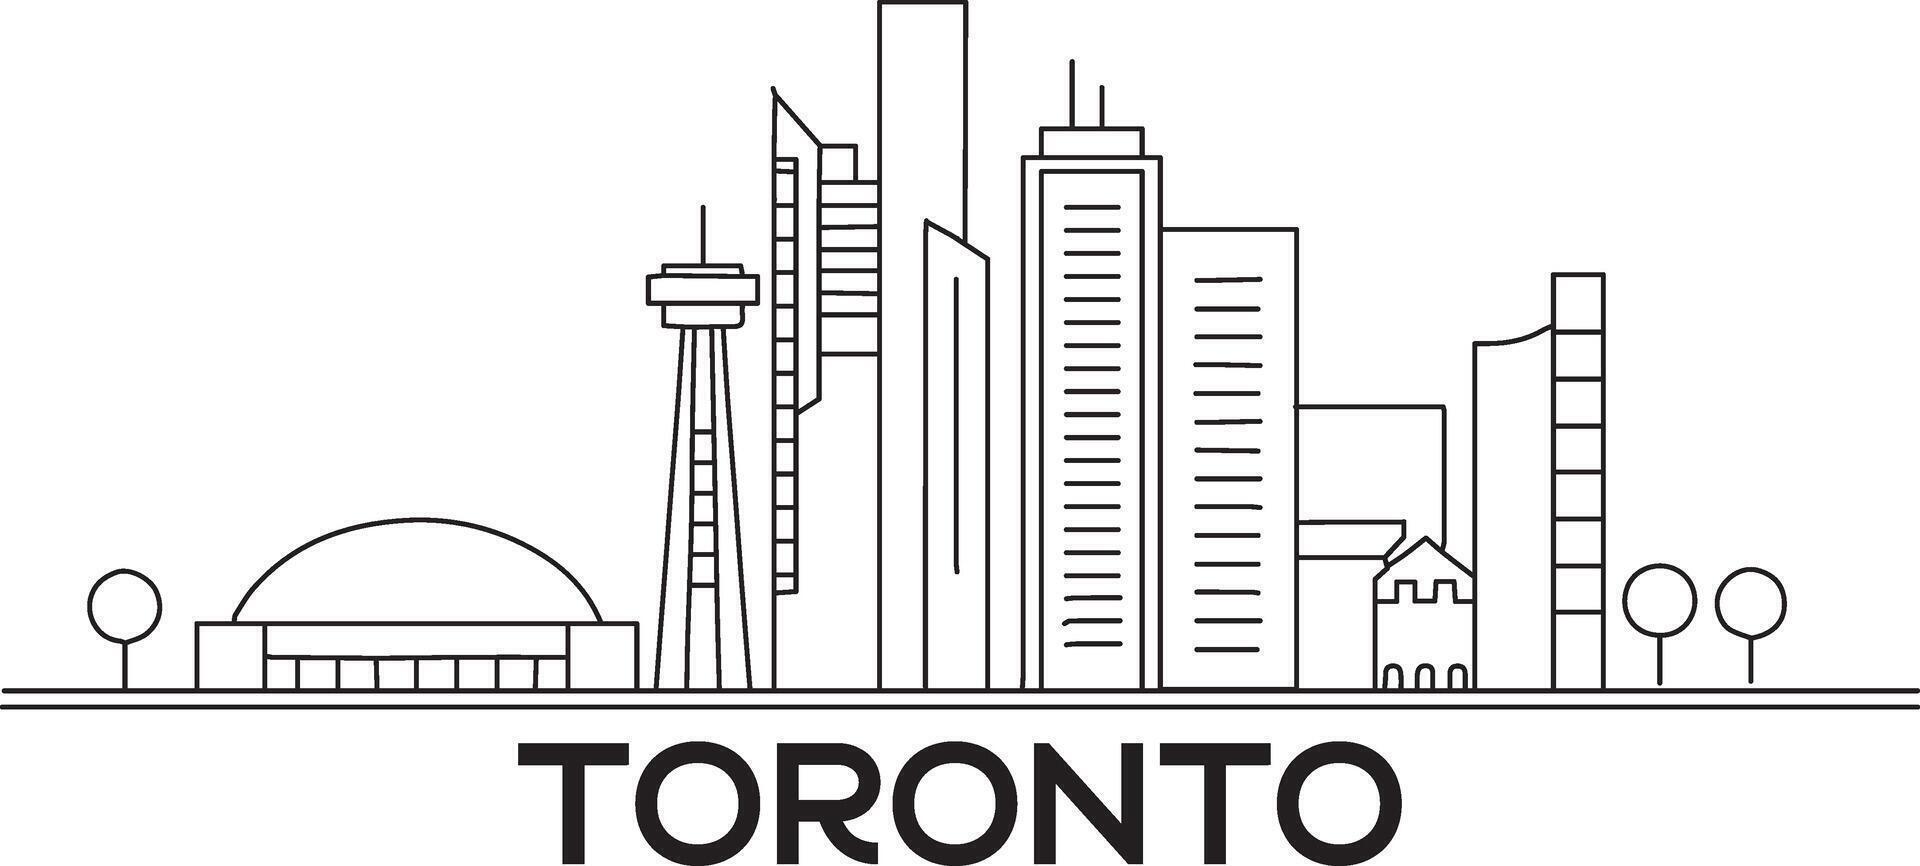 Toronto City Line Draw Free Vector. vector